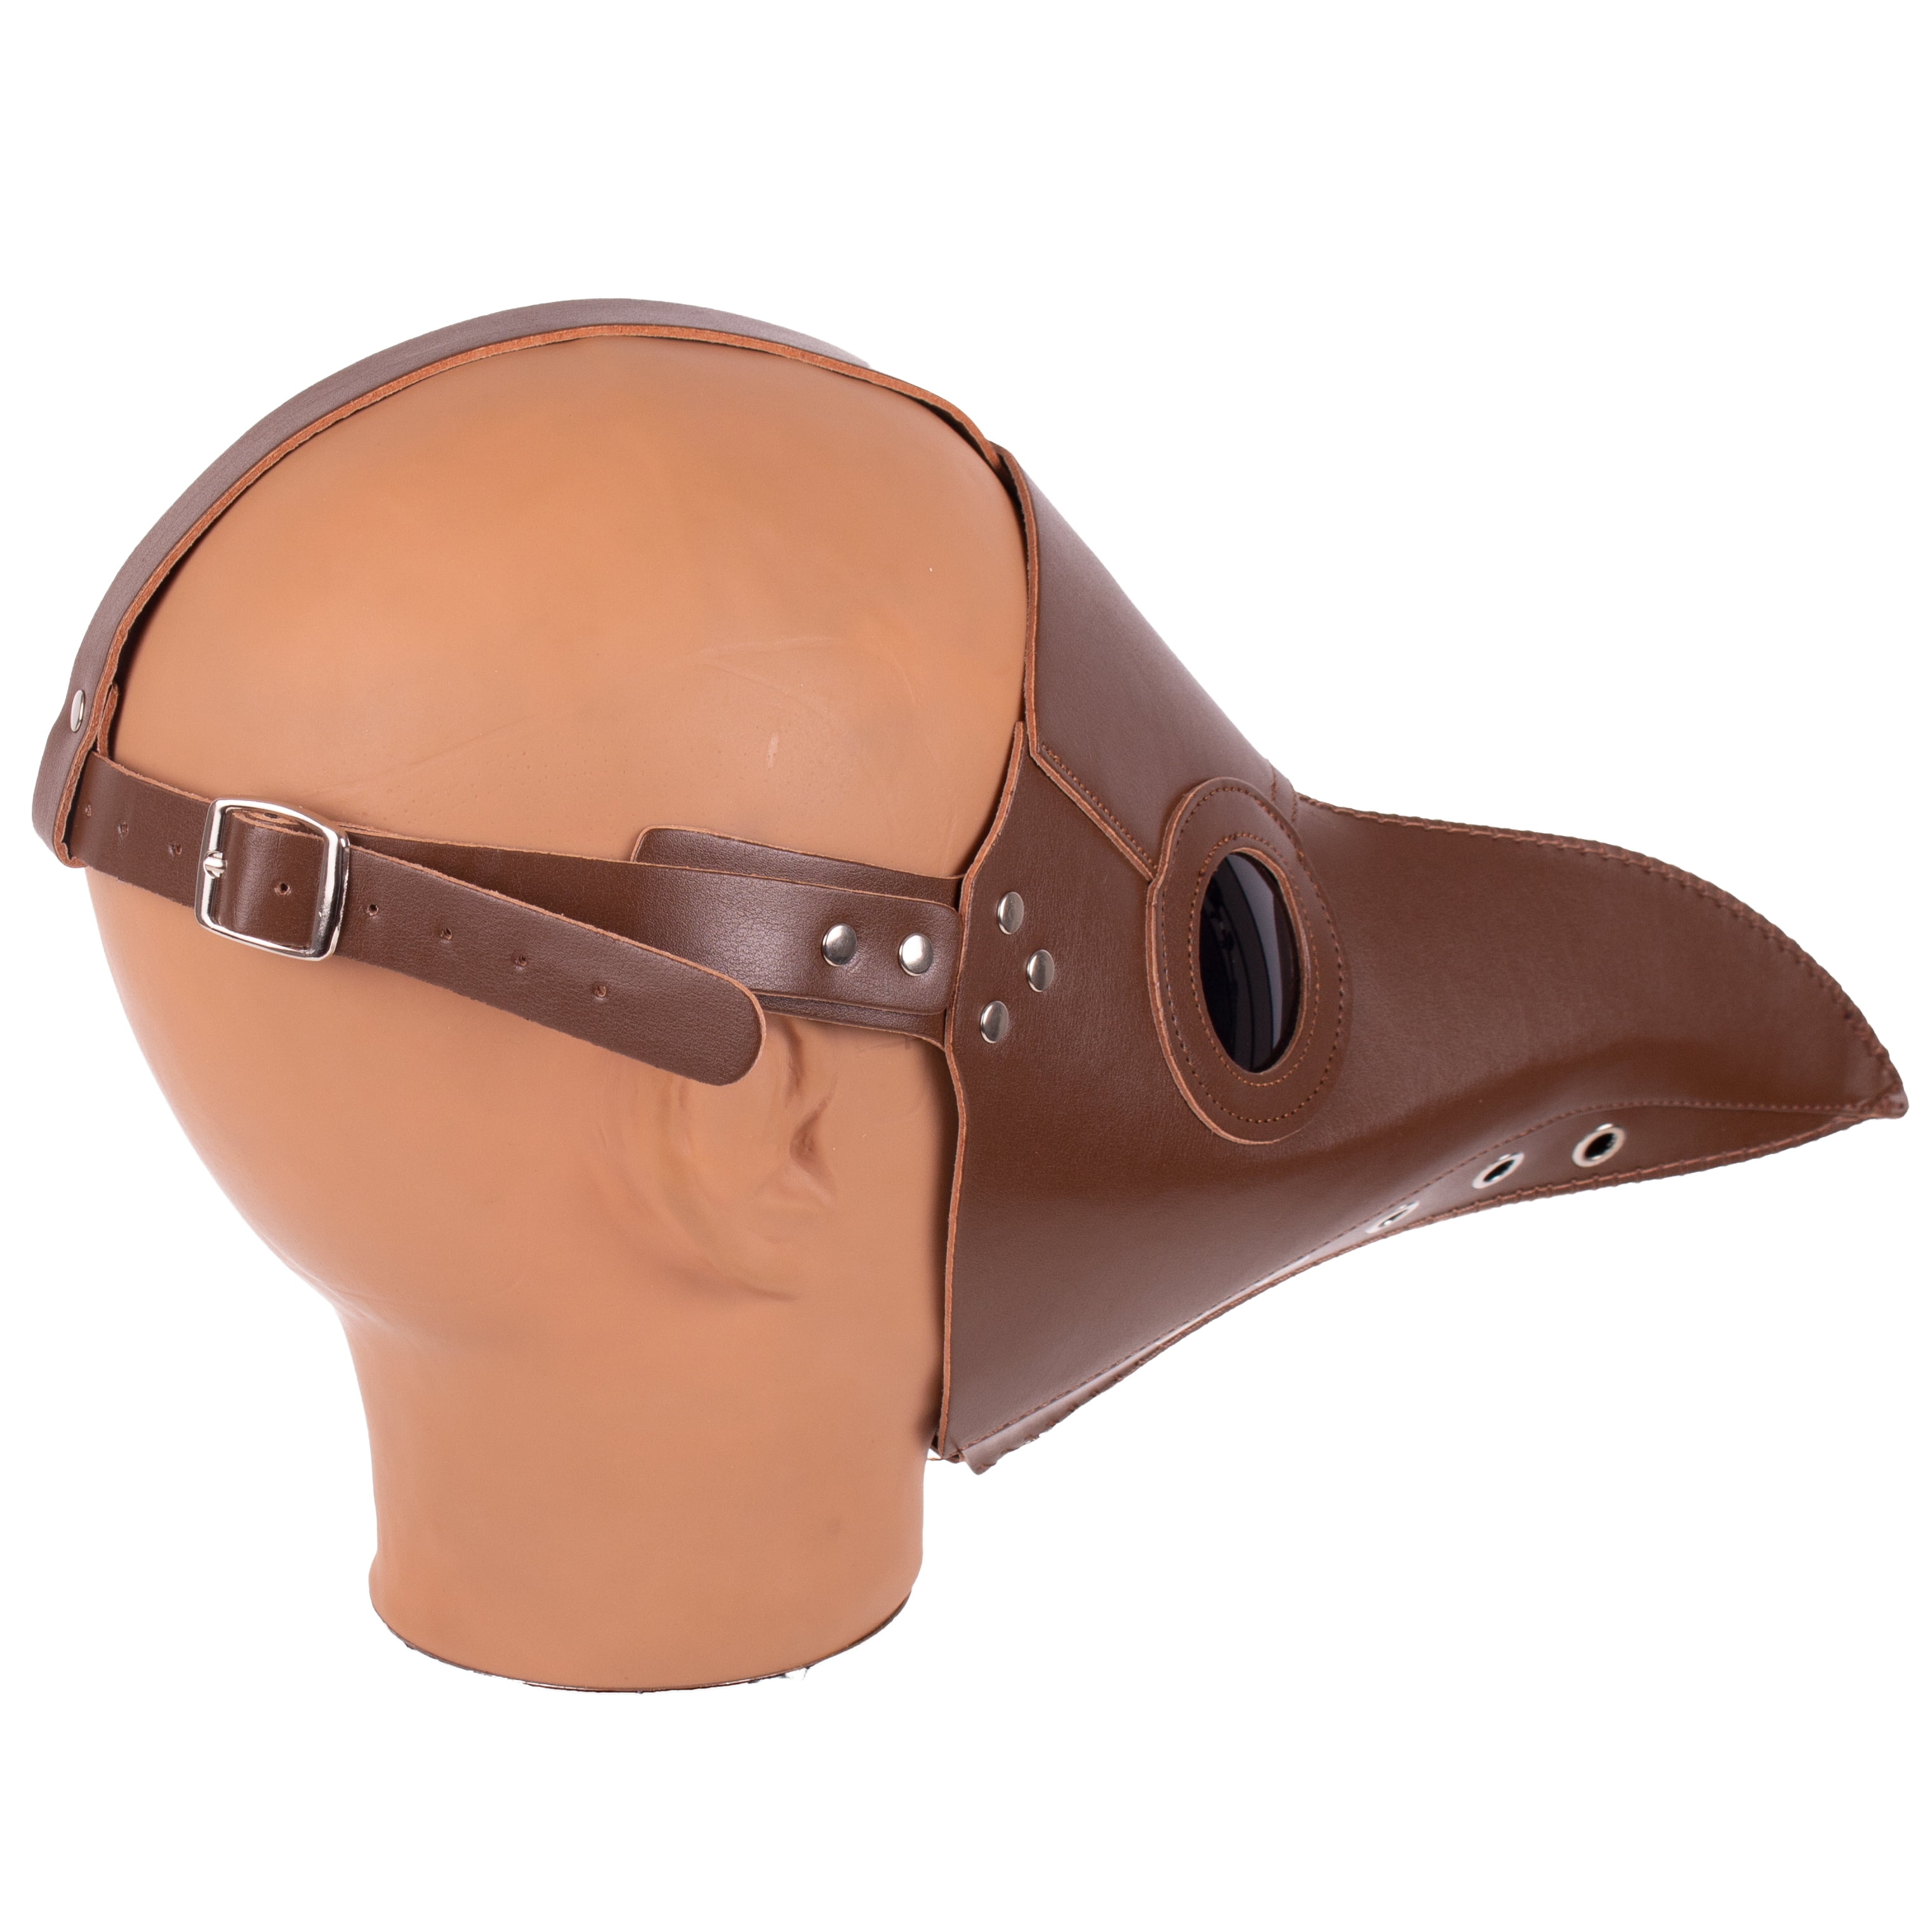 KEBEIXUAN Plague Doctor Mask Steampunk Long Nose Mask PU Material